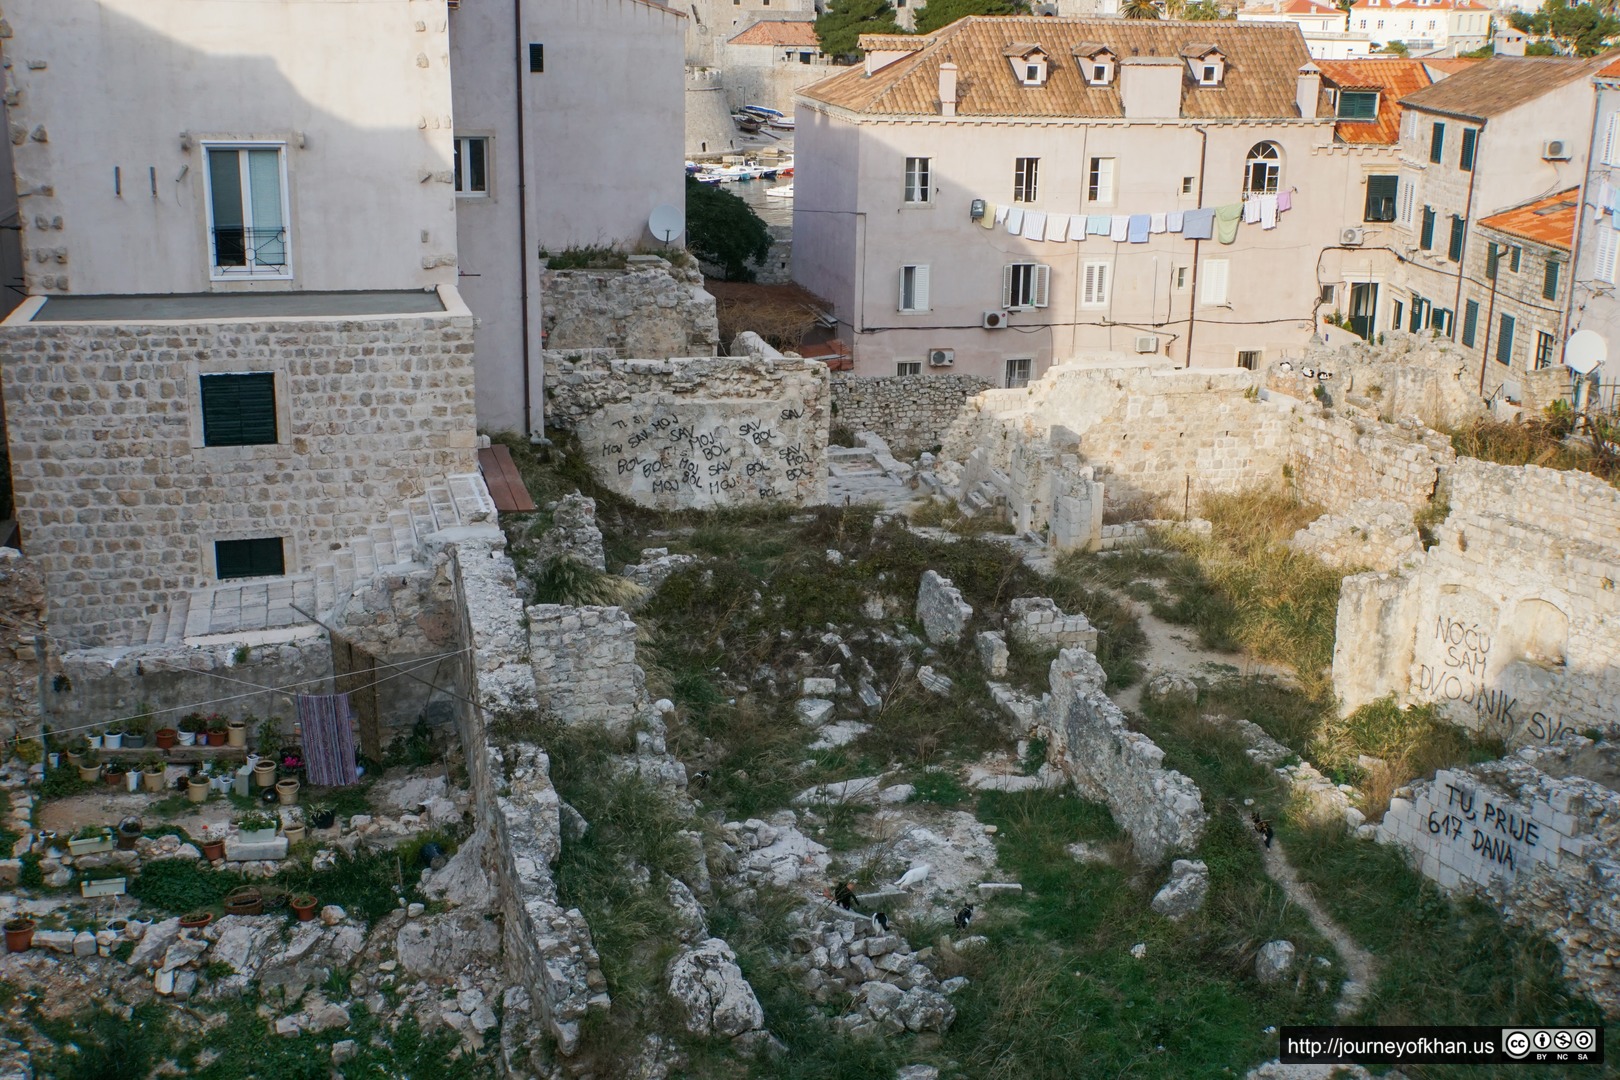 Walls and Graffiti in Dubrovnik